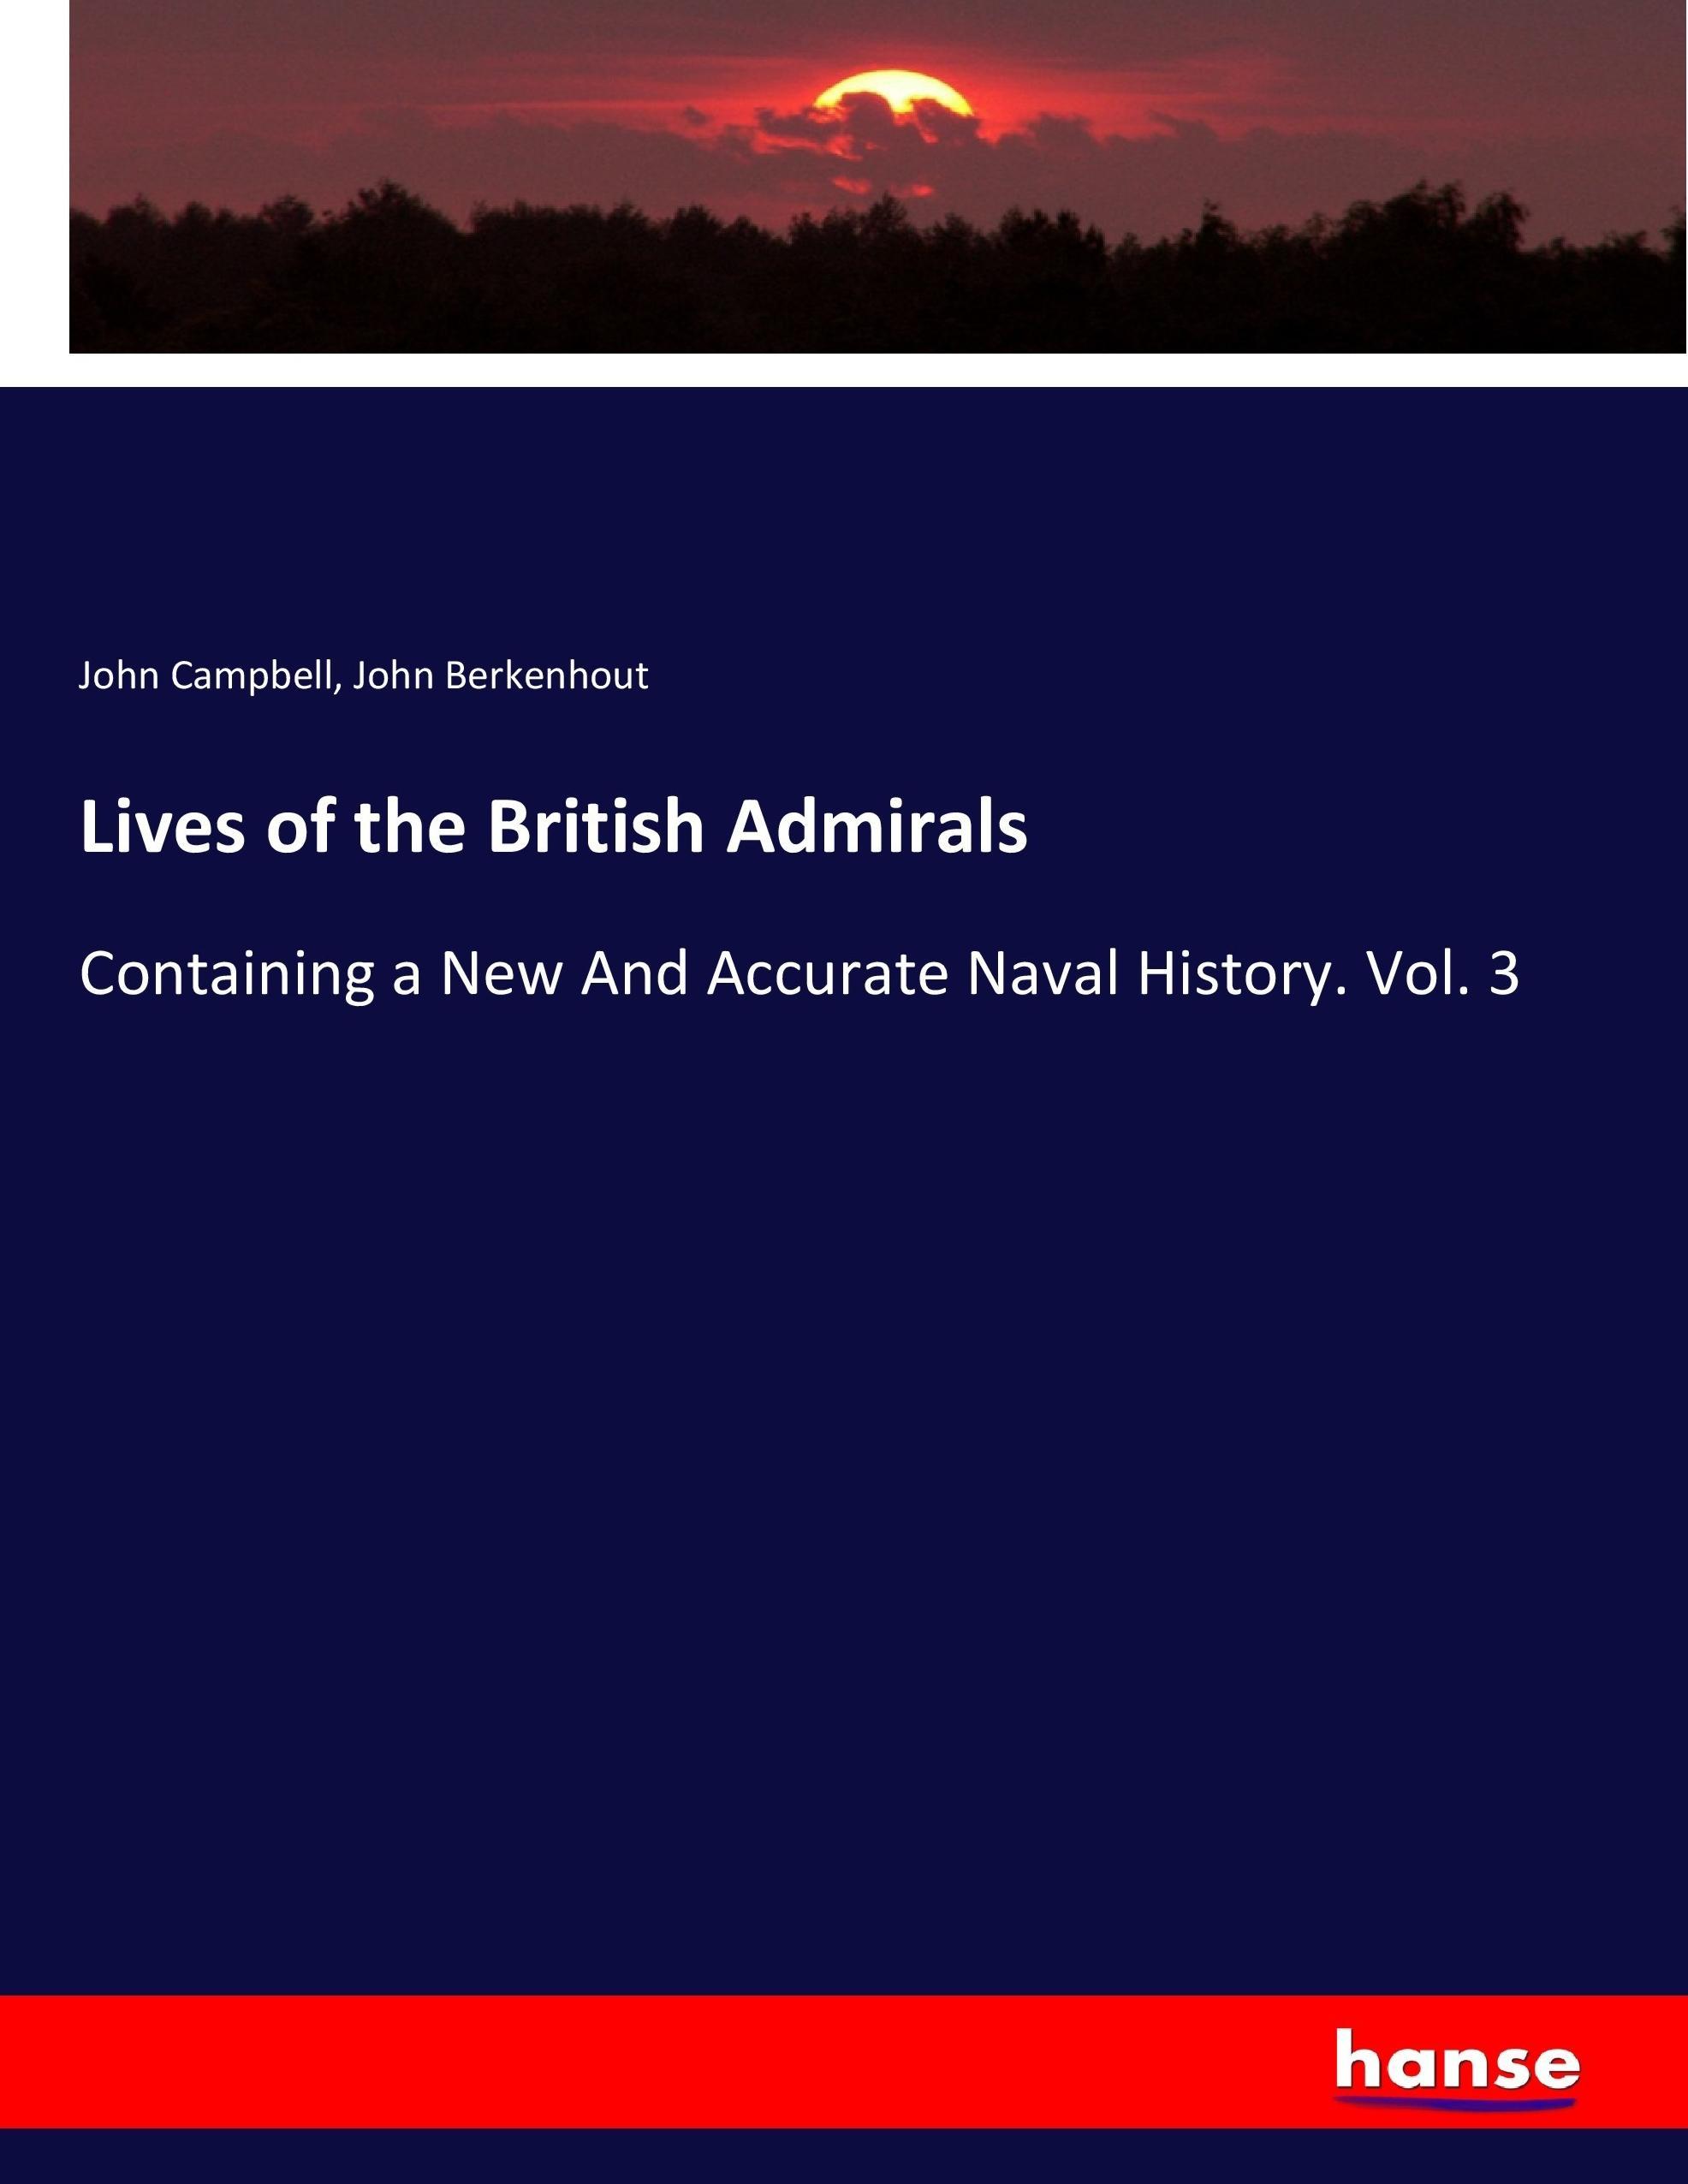 Lives of the British Admirals - Campbell, John Berkenhout, John